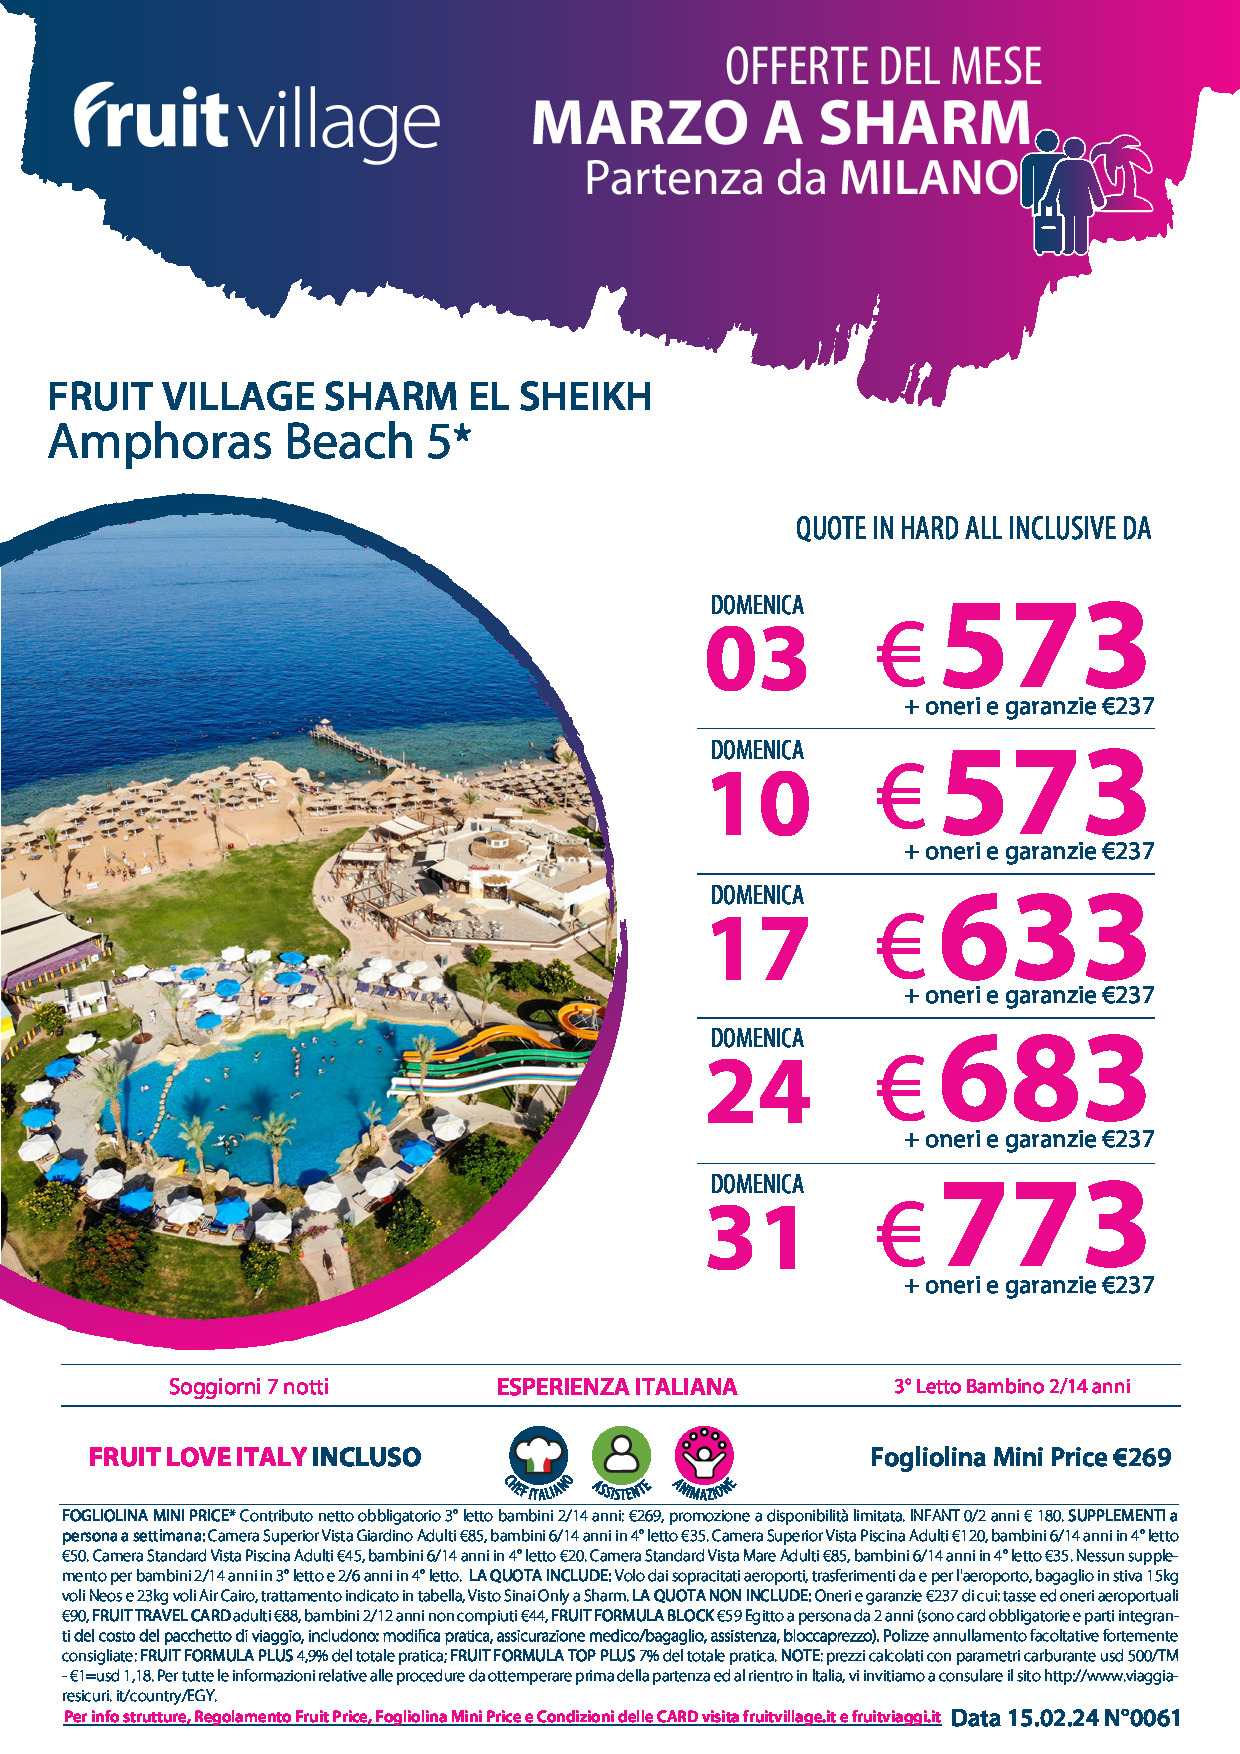 FRUIT VILLAGE Sharm El Sheikh Amphoras Beach - da Milano a Marzo